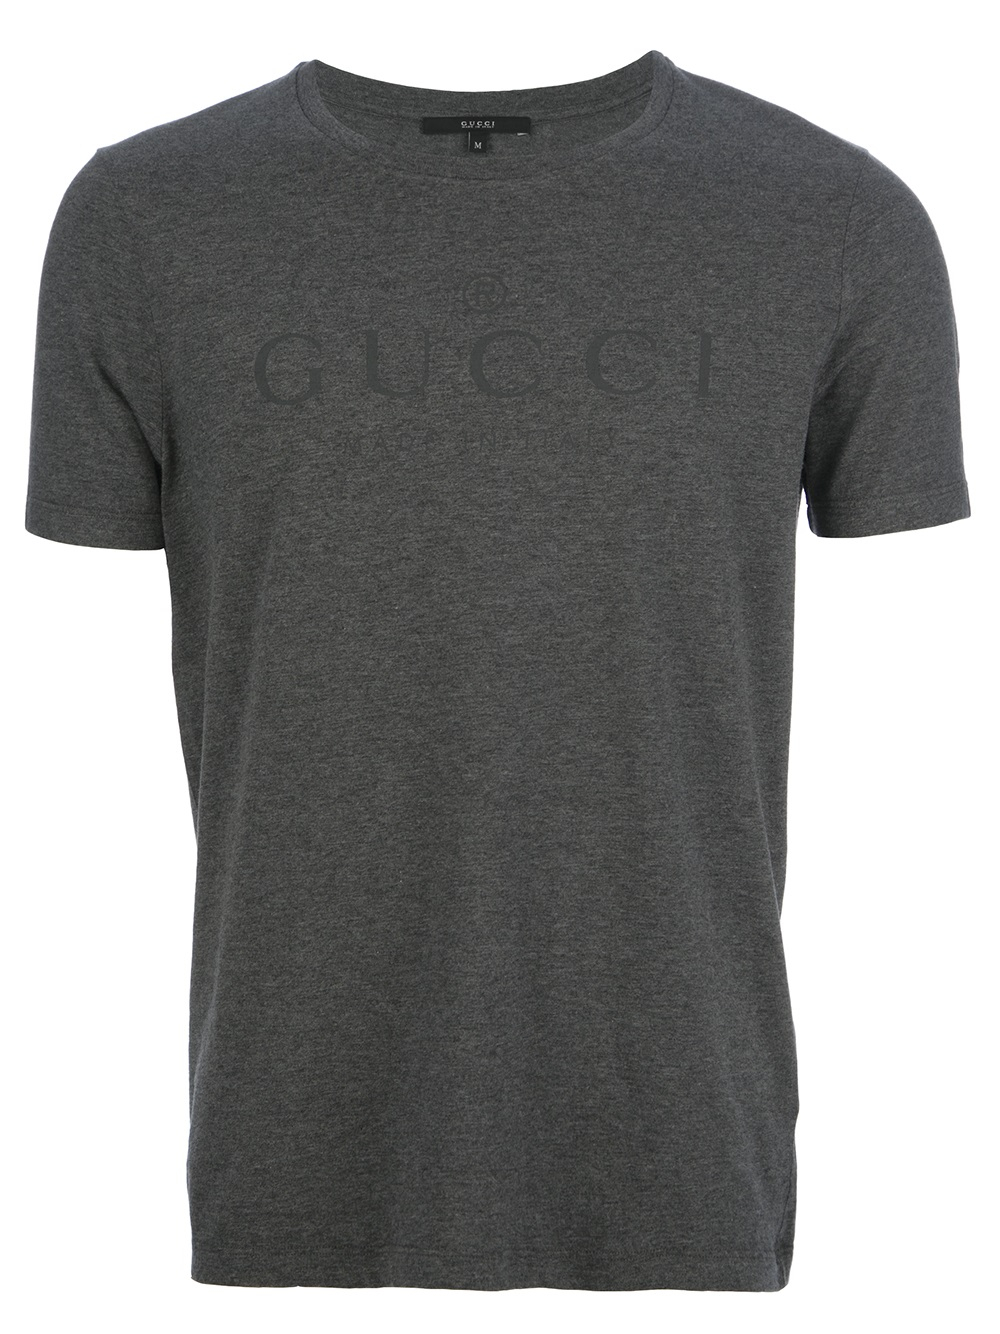 grey gucci shirt